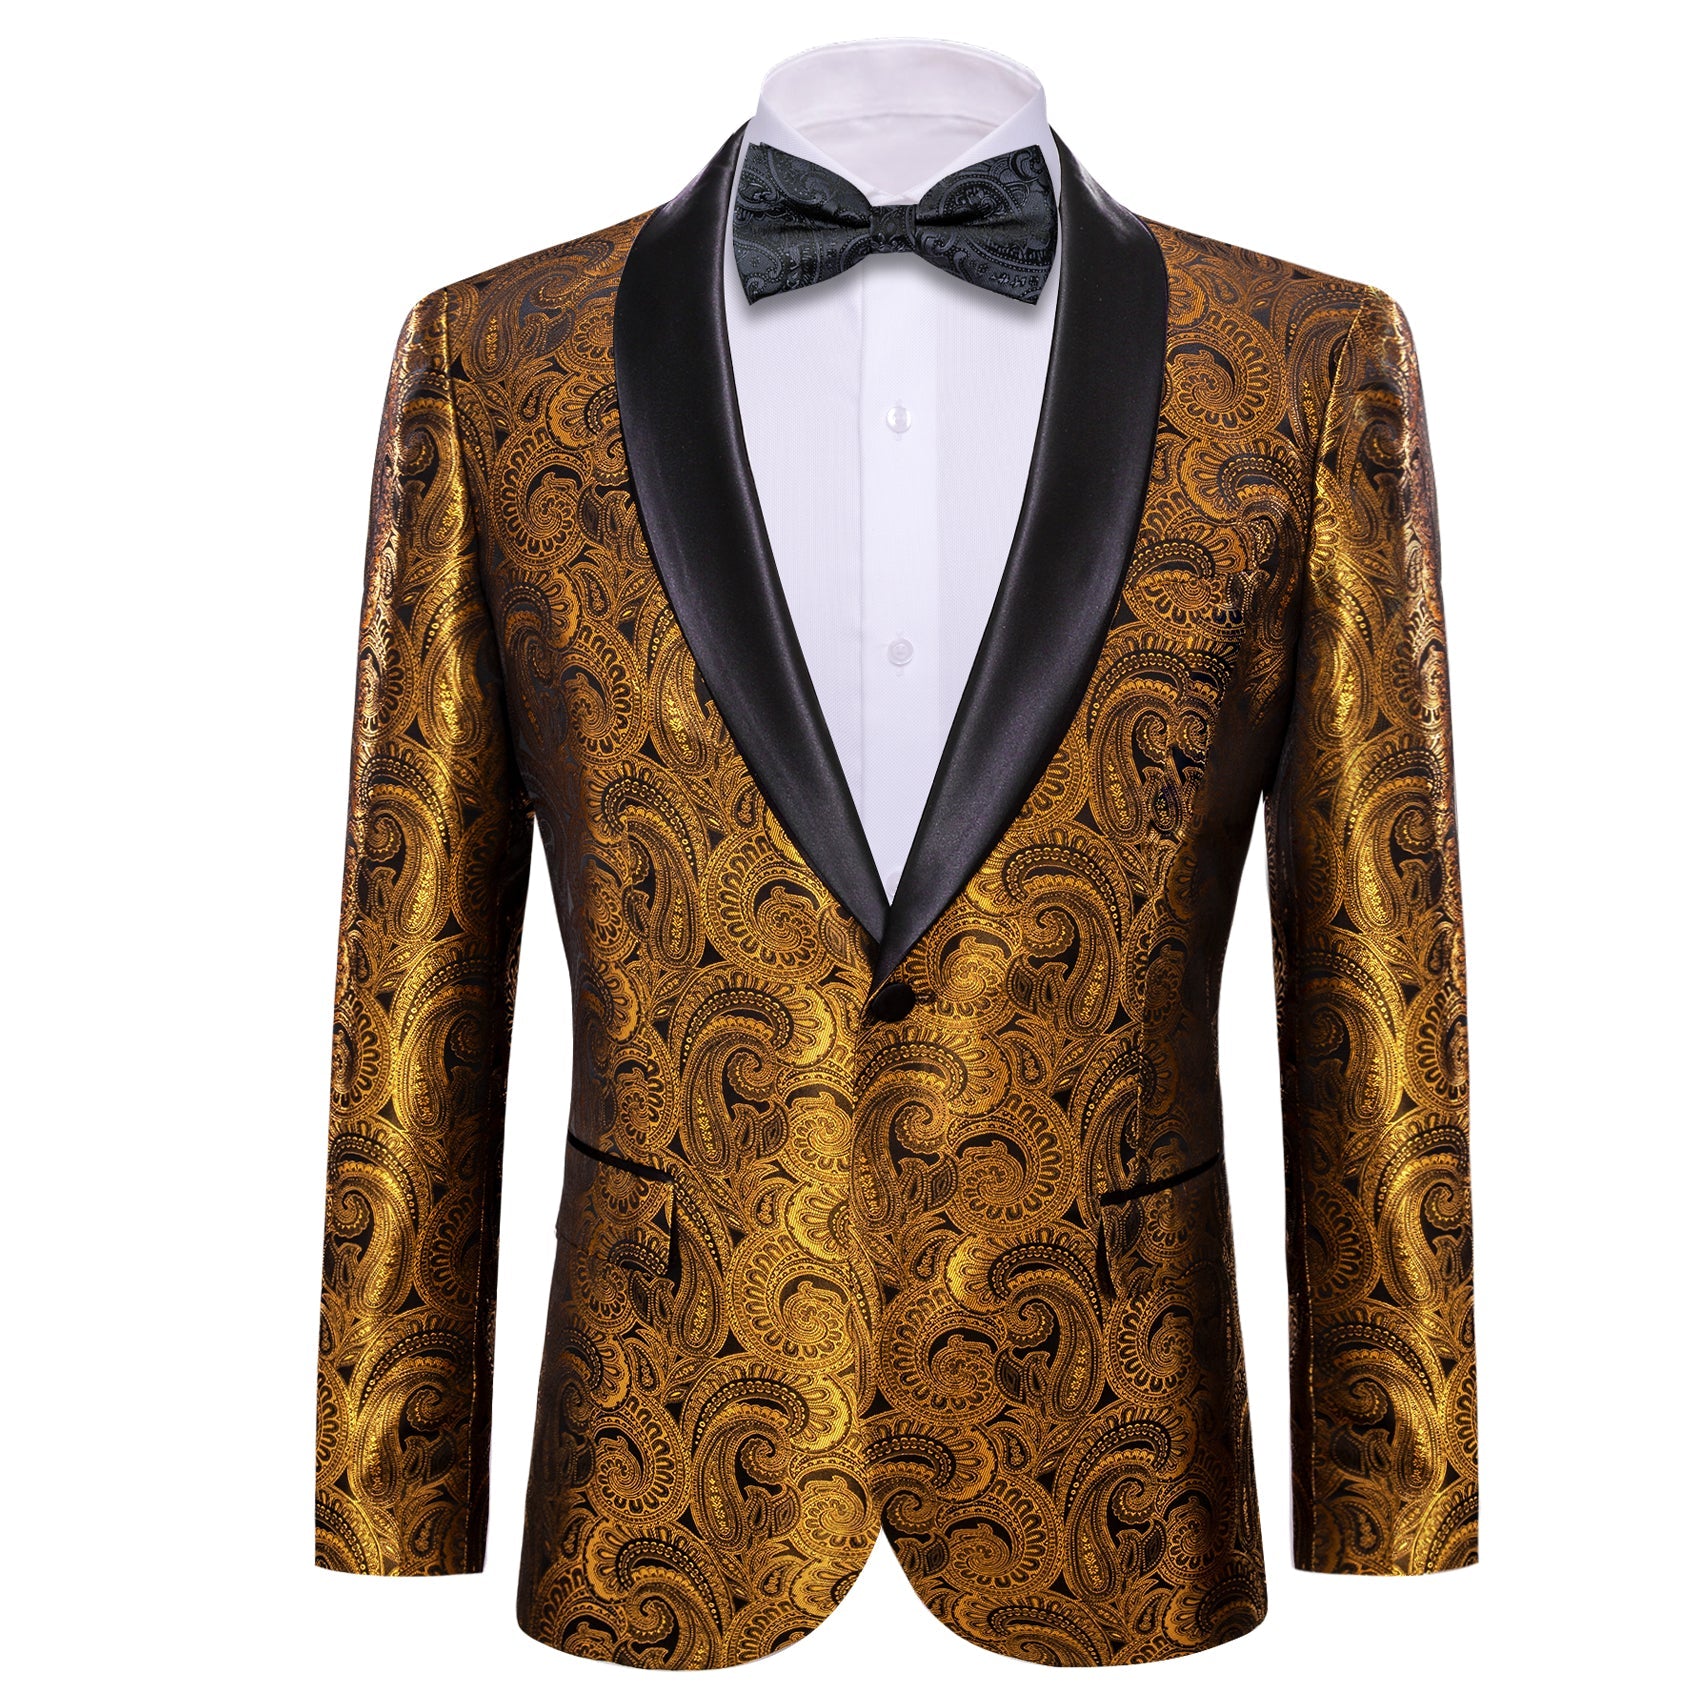 Men's Dress Party Brown Gold Floral Suit Jacket Slim One Button Stylish Blazer